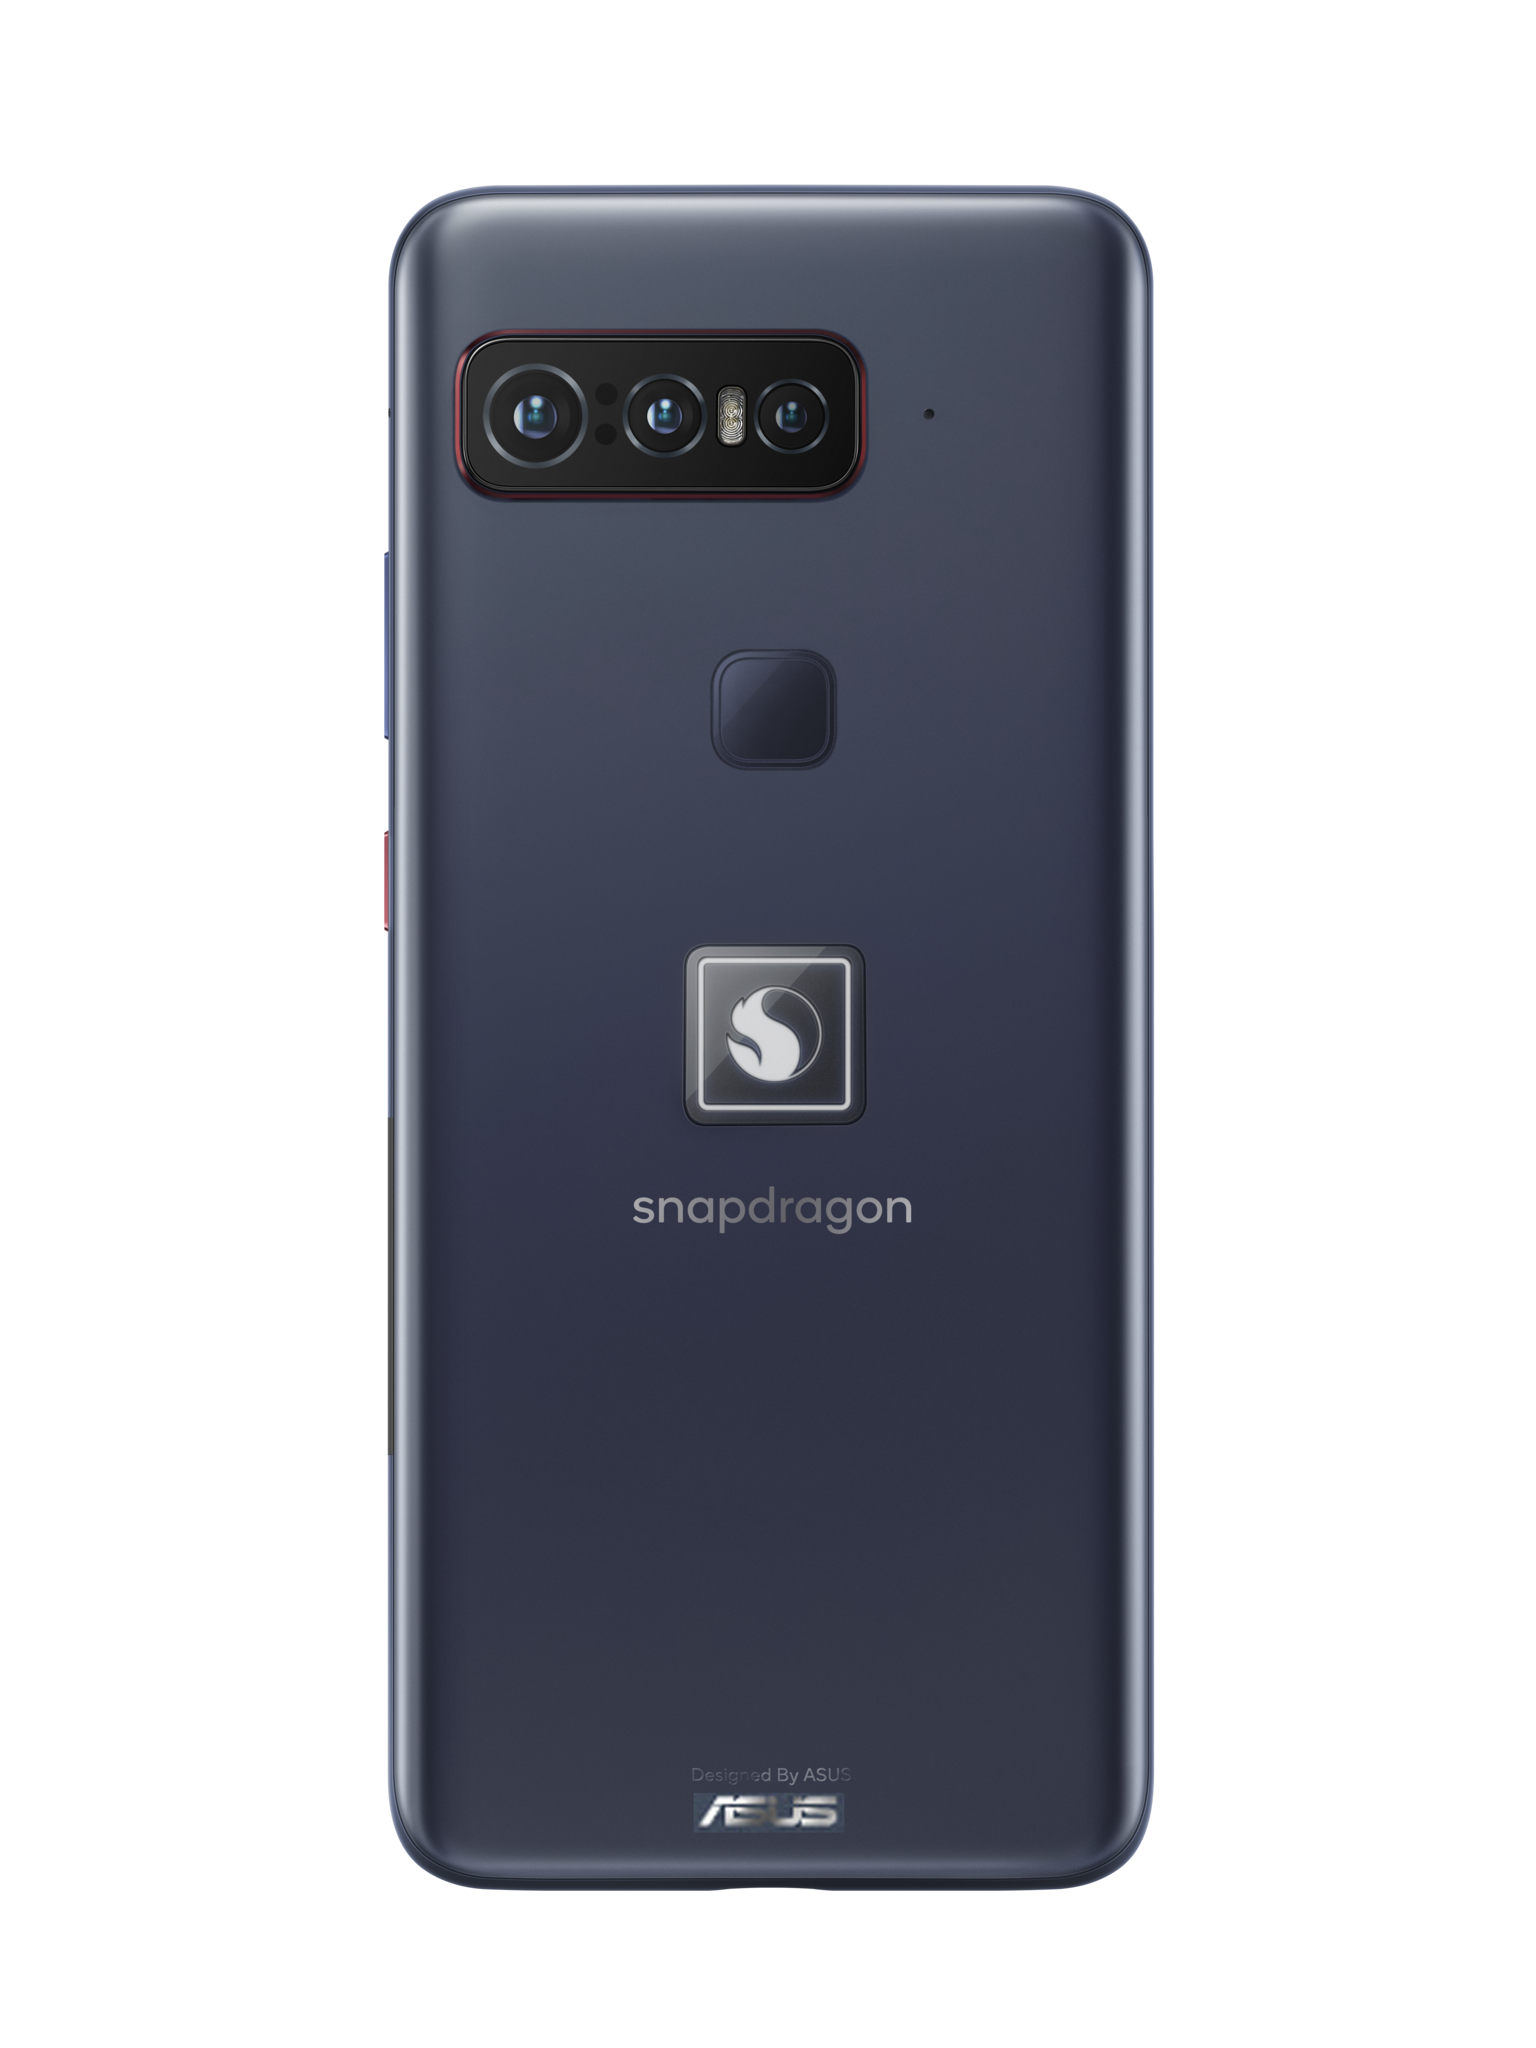 Qualcomm Smartphone For Snapdragon Insiders